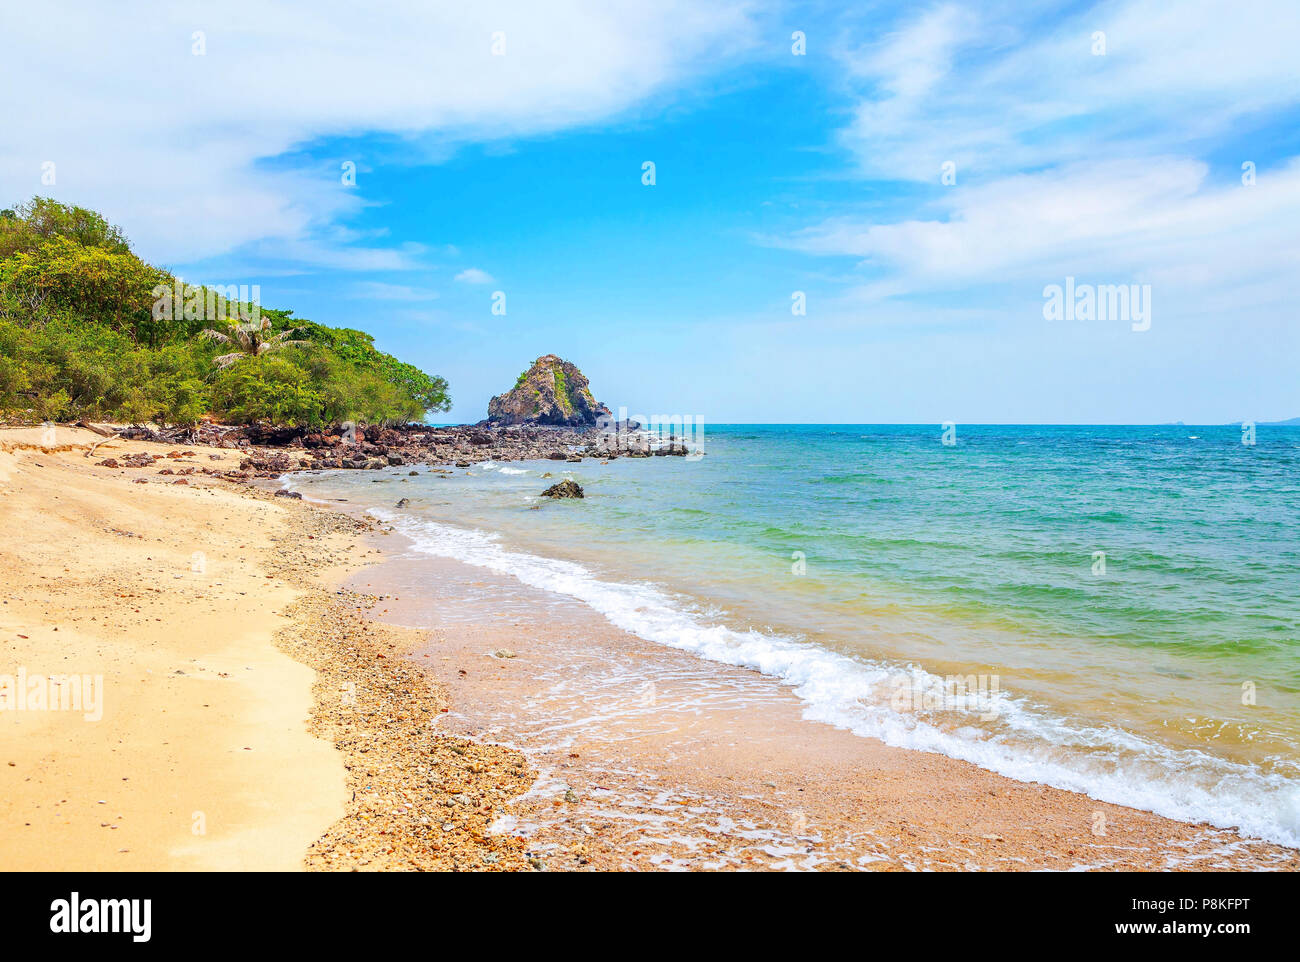 Beautiful tropical sandy beach in Thailand. Stock Photo